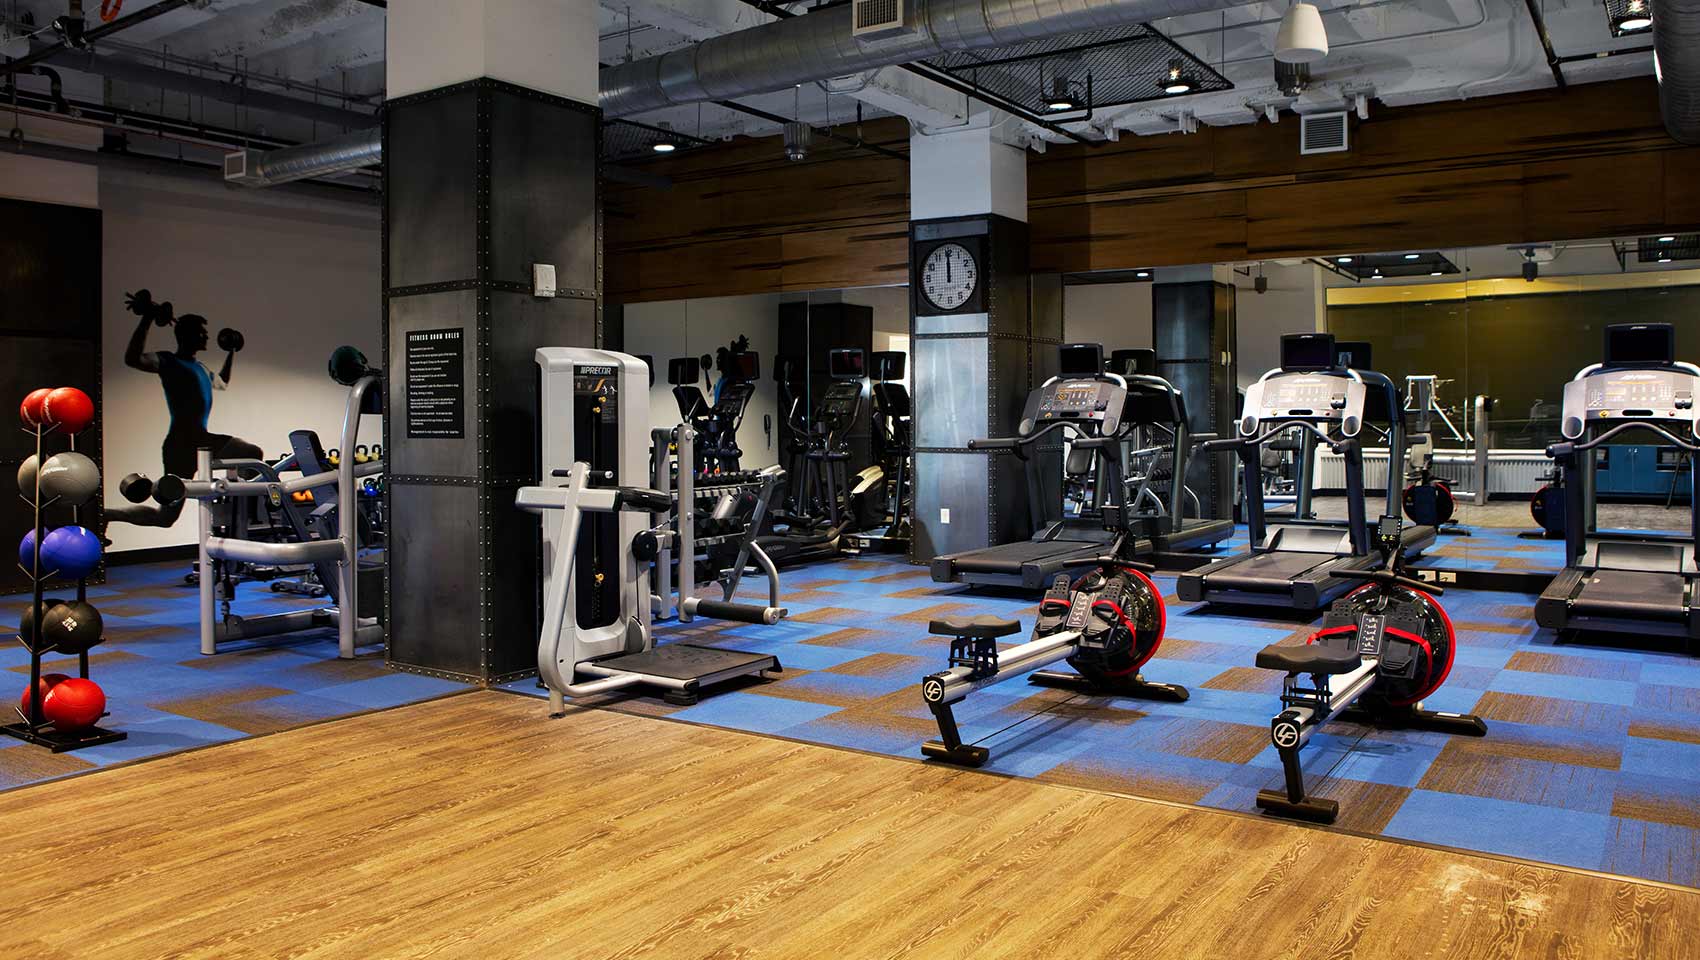 Kimpton Cardinal Hotel fitness center equipment